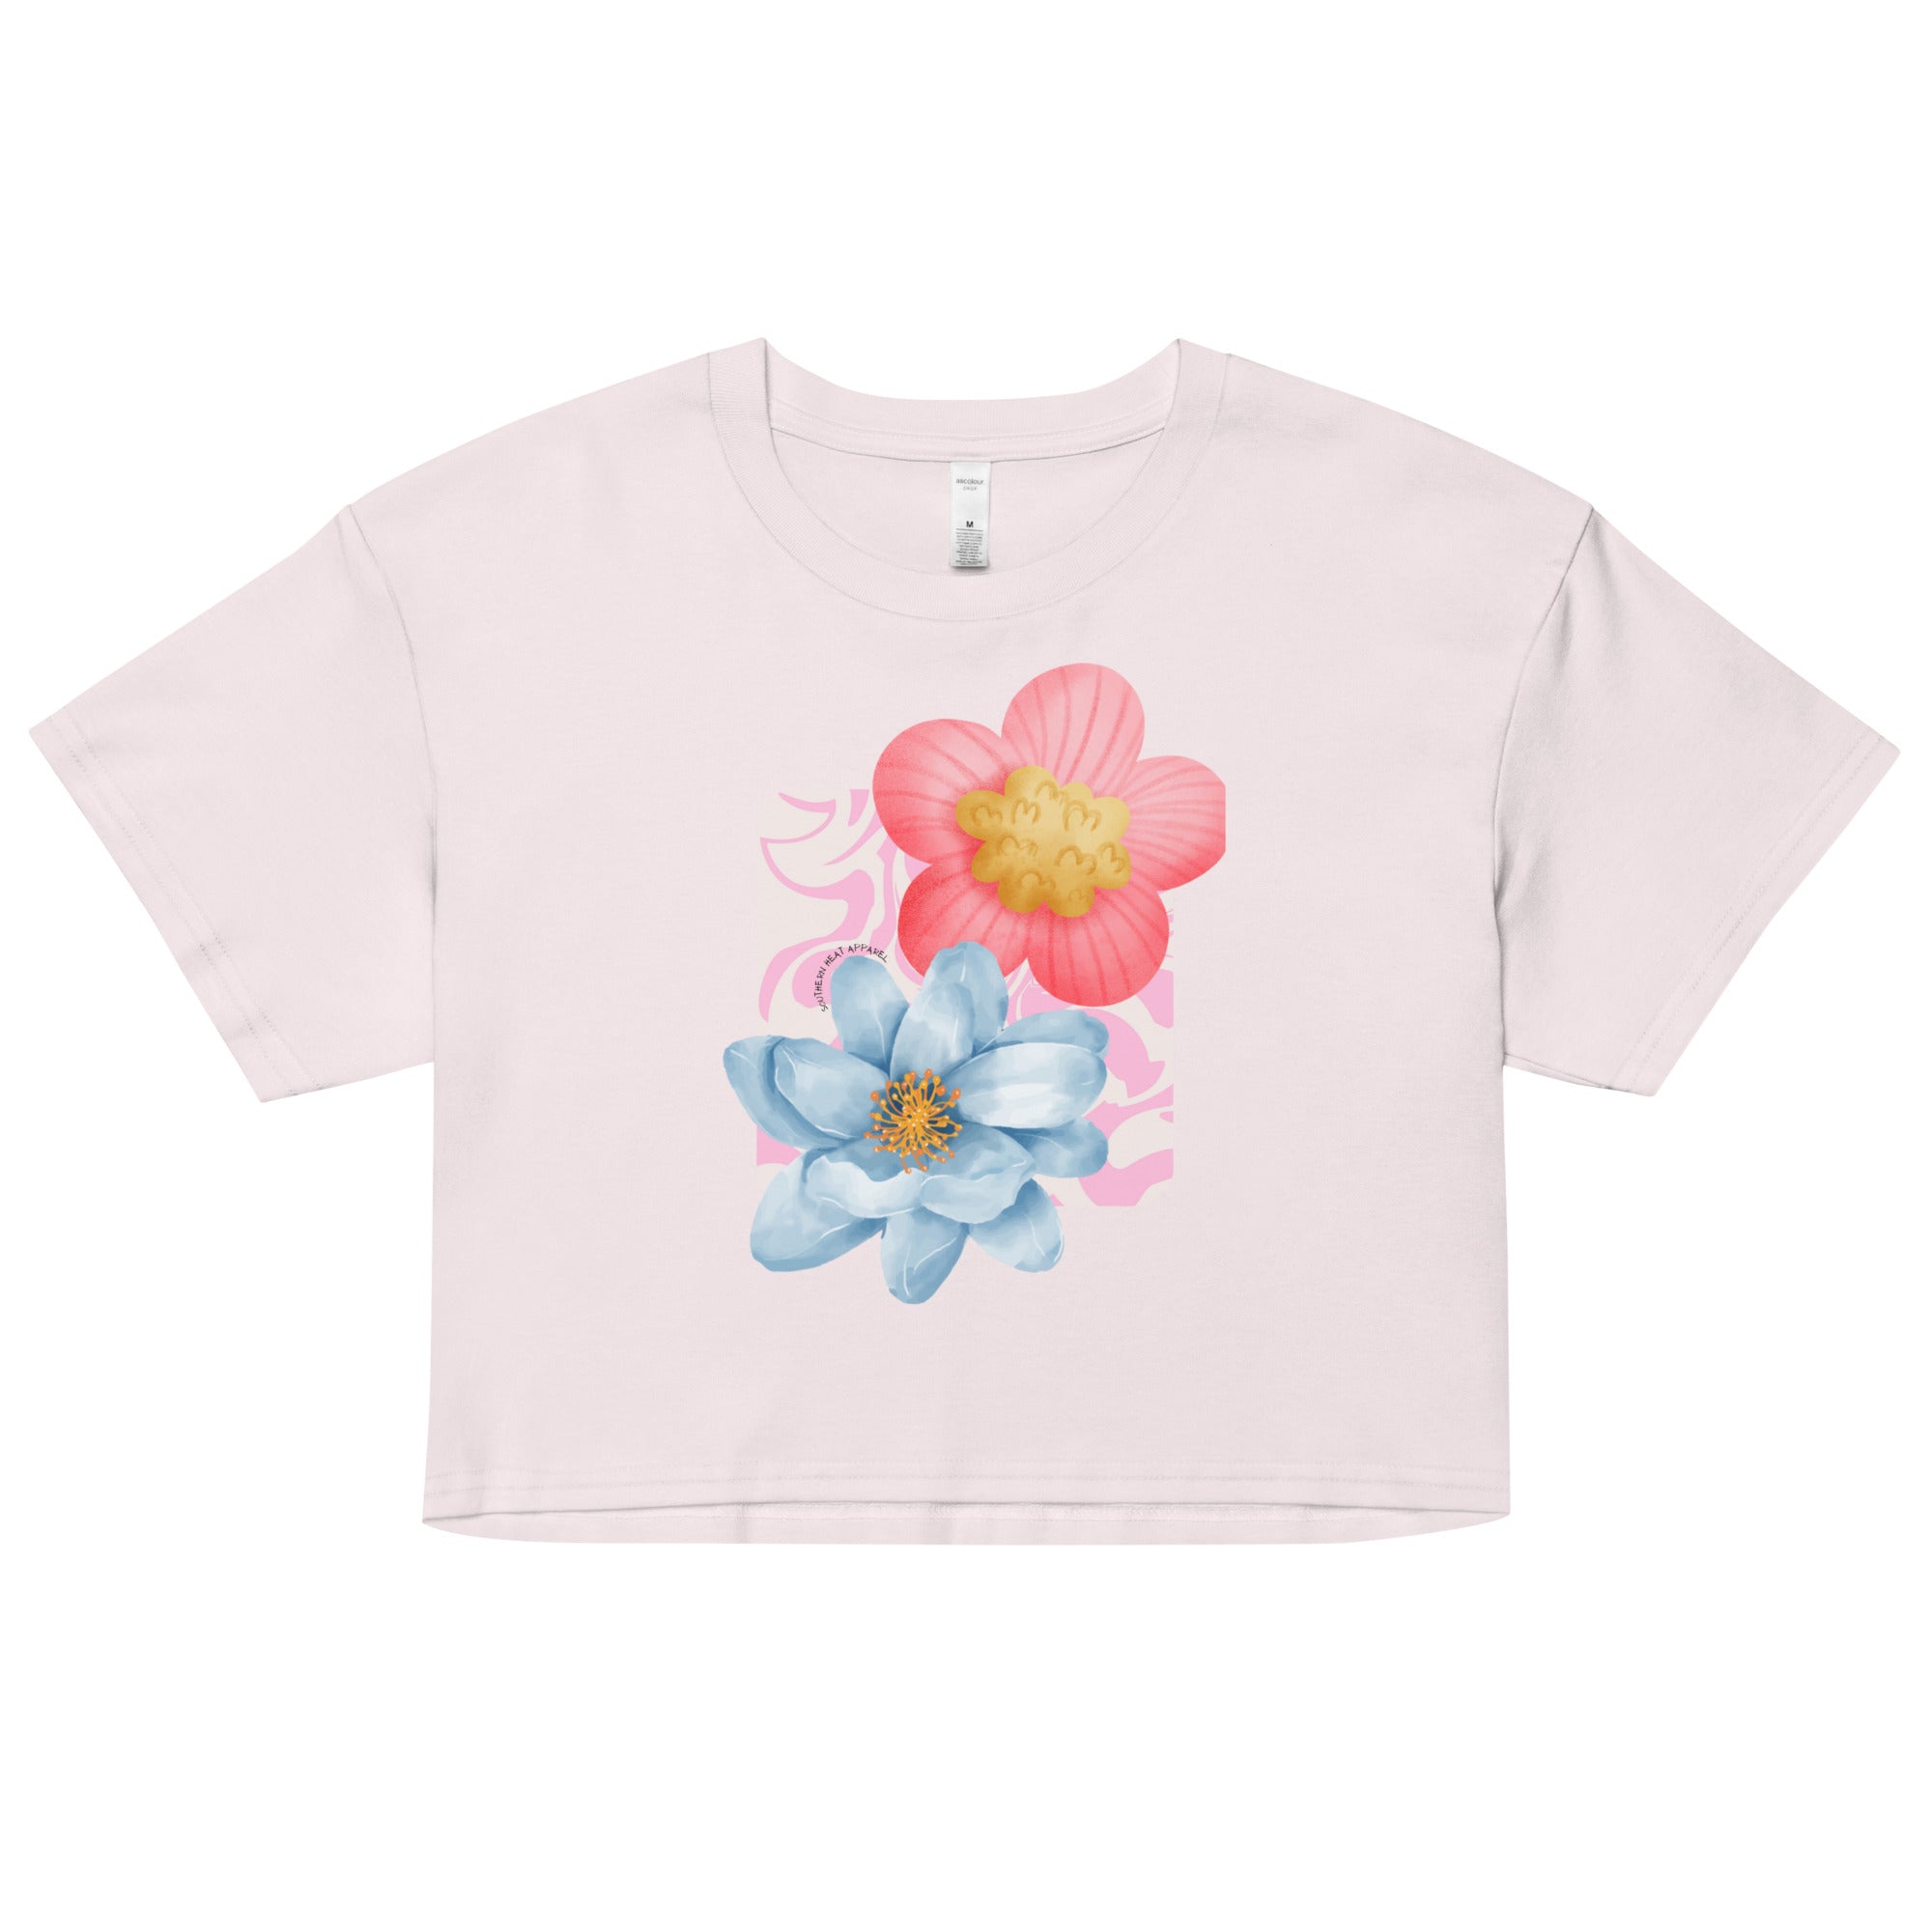 pink&blue.floral-Women’s crop top